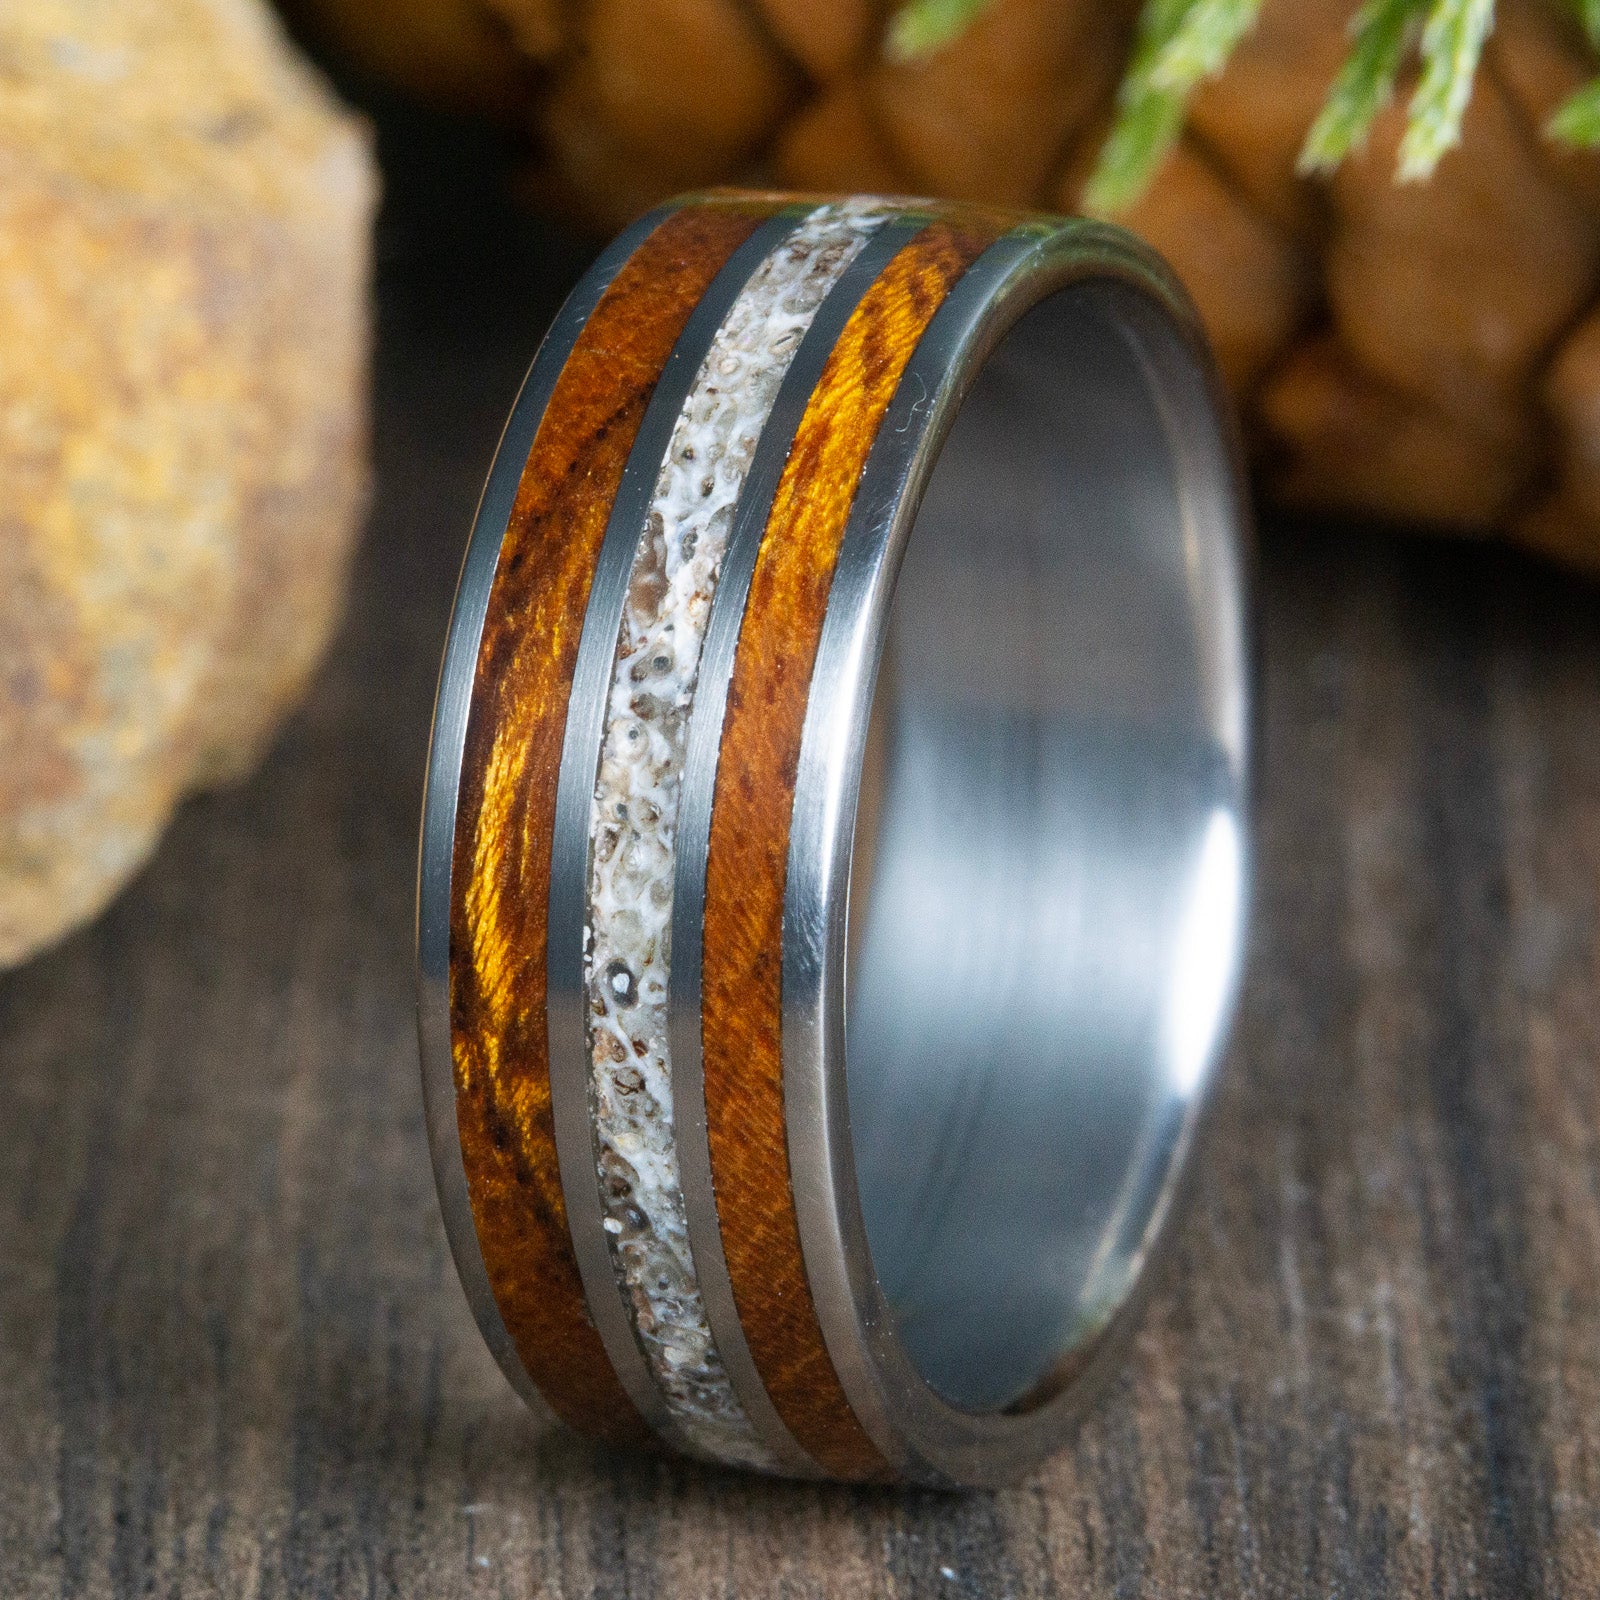 Antler and wood ring-ironwood inlay